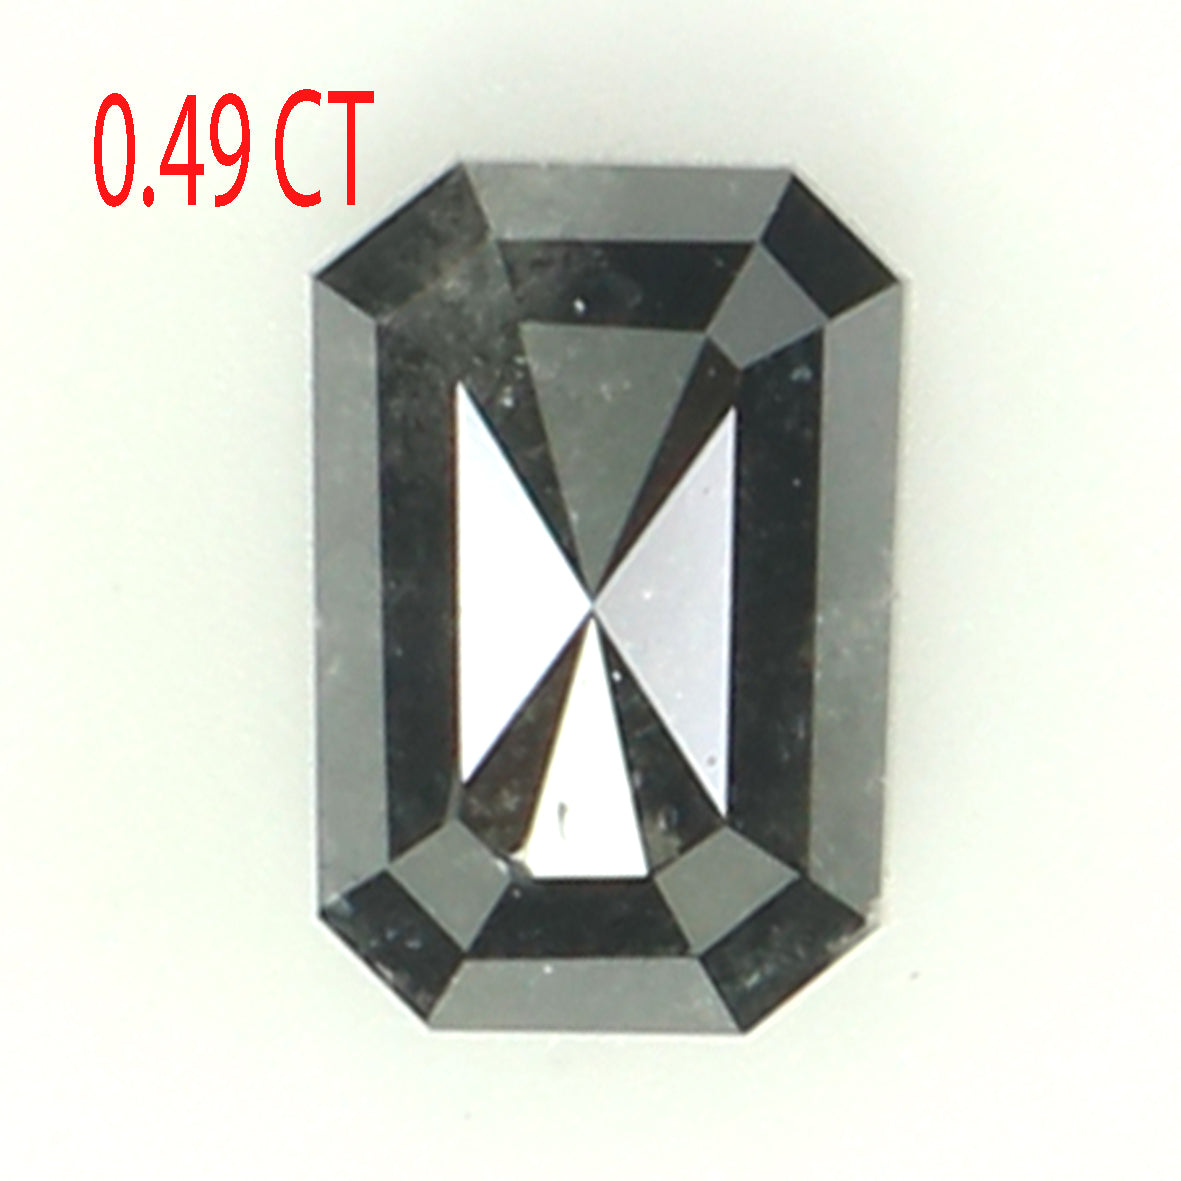 0.49 Ct Natural Loose Diamond, Emerald Cut Diamonds, Black Color Diamond, Rose Cut Diamond, Rustic Diamond, Radiant Diamond KQL5359